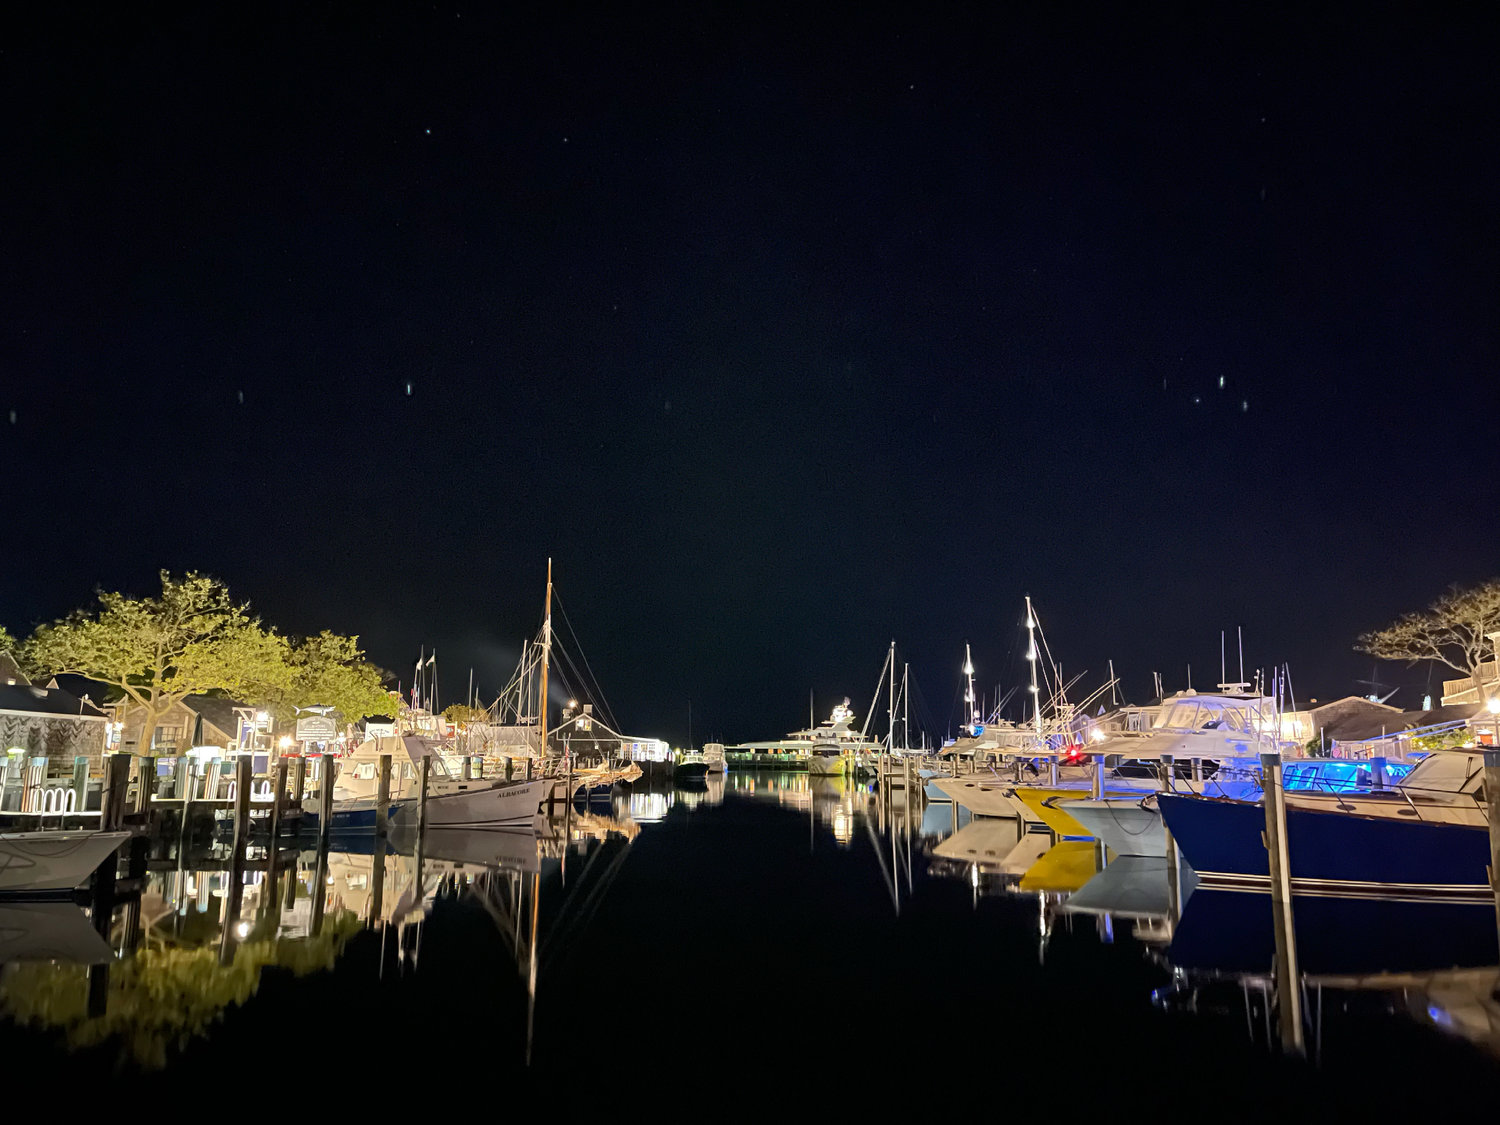 The Nantucket Boat Basin after dark.